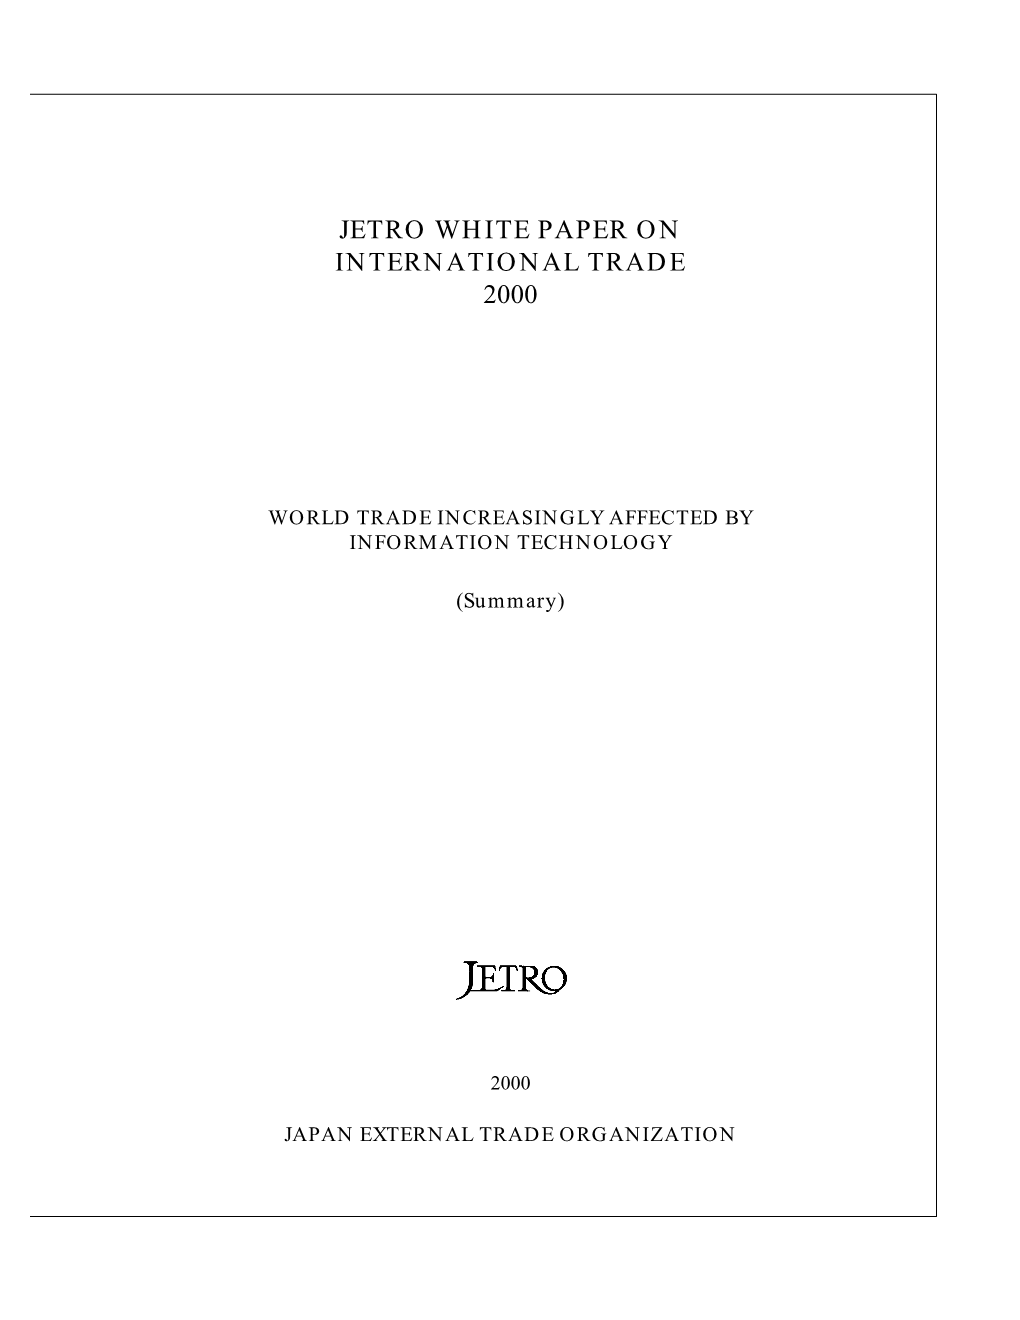 Jetro White Paper on International Trade 2000